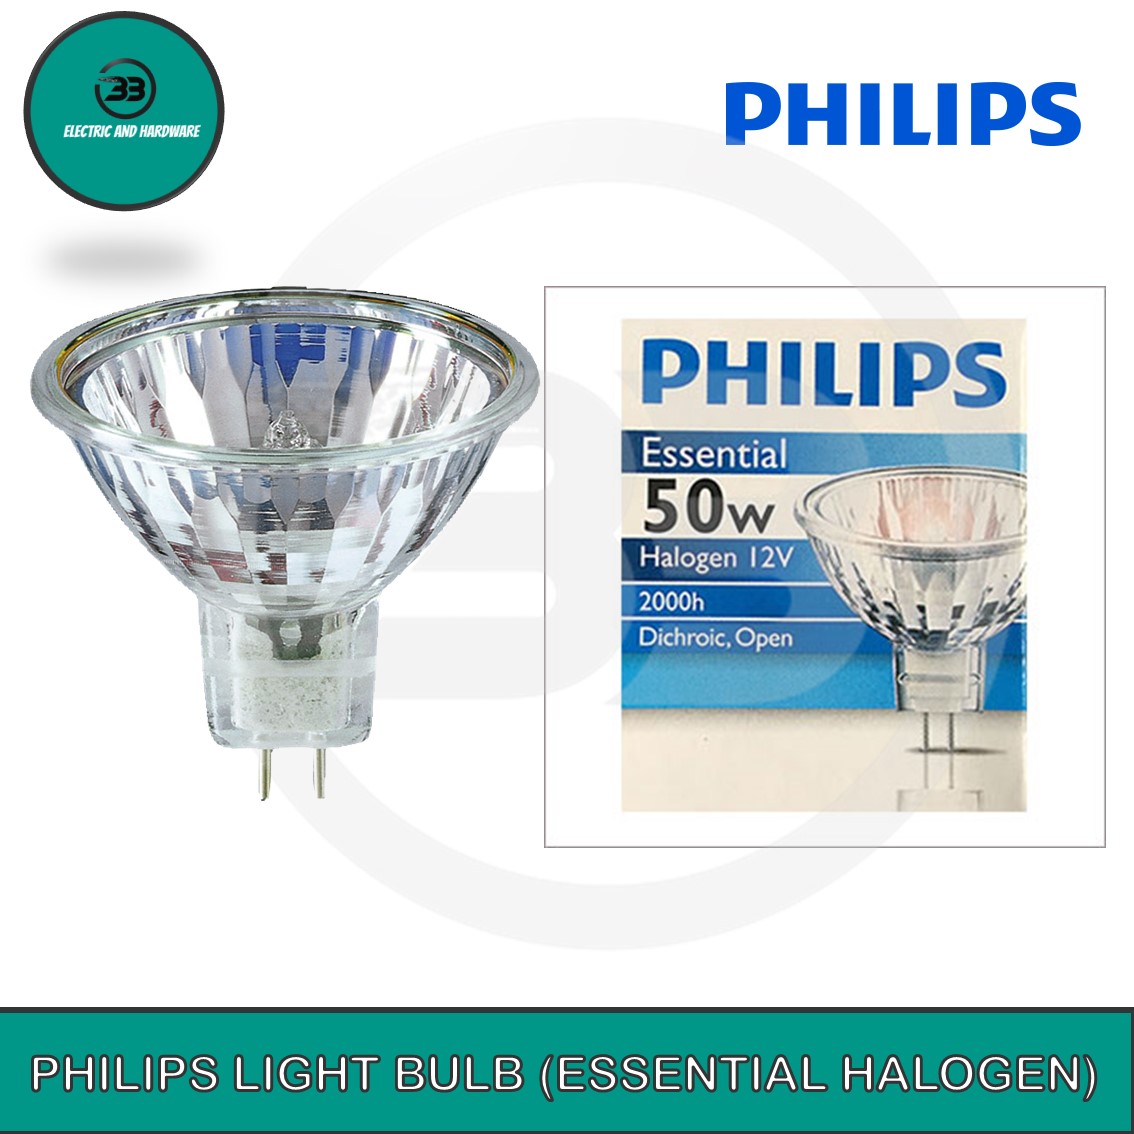 Philips MR16 12V50W GU5.3 36° halogen light essential Dichroic reflector lamp 